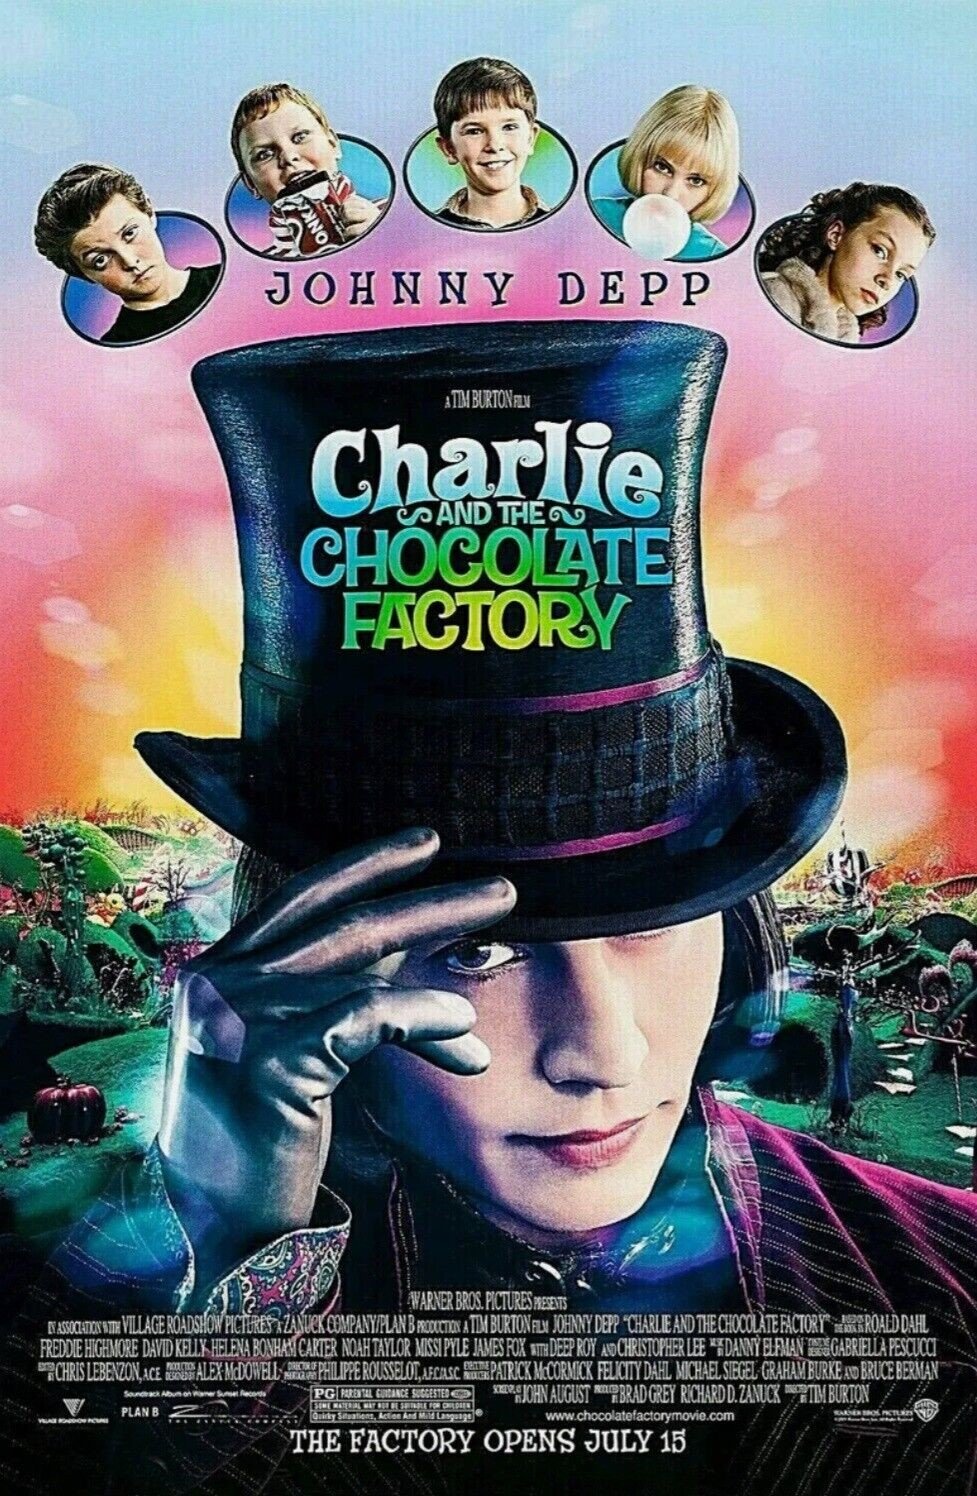 Johnny Depp CHARLIE CHOCOLATE FACTORY set 2 original 27x40 movie posters 2005